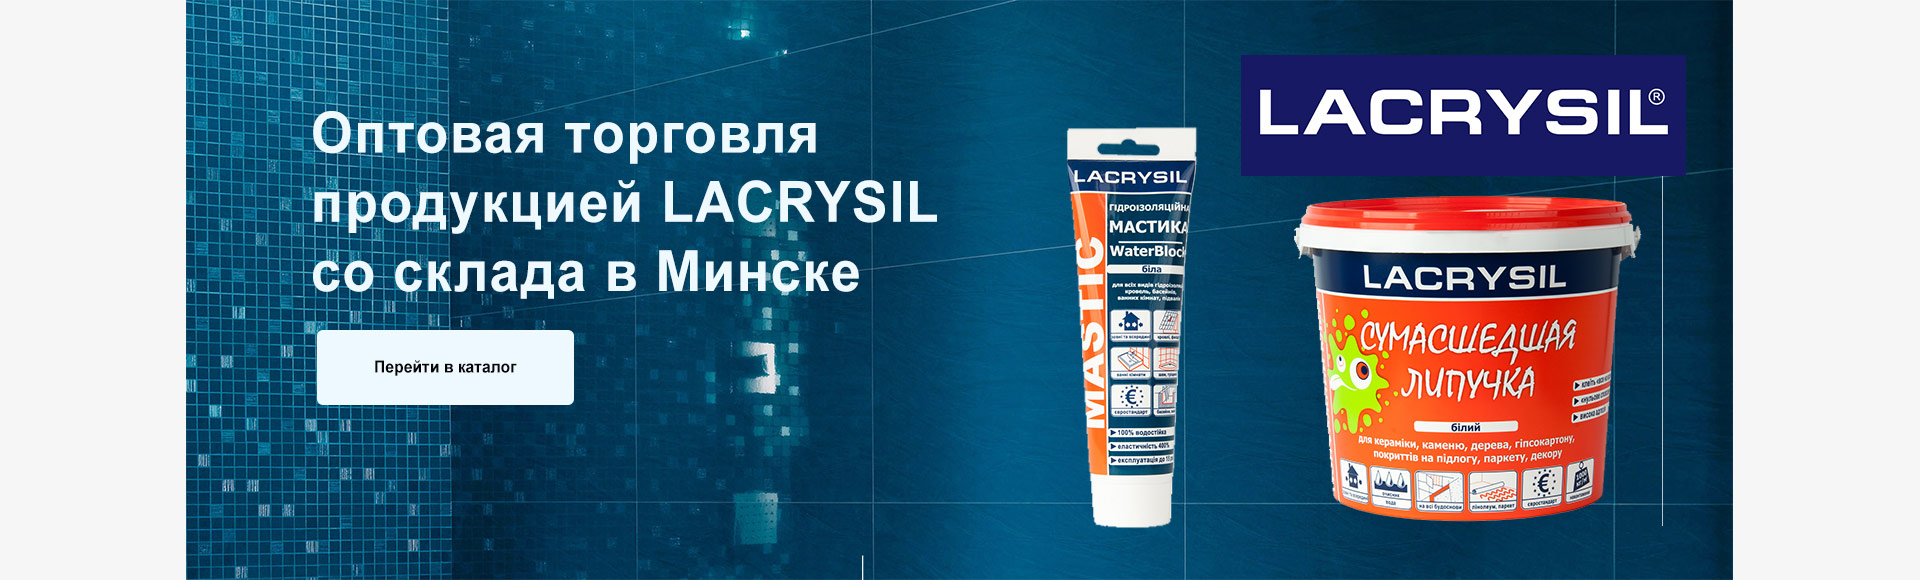 Lacrysyl - оптовая торговля в Минске